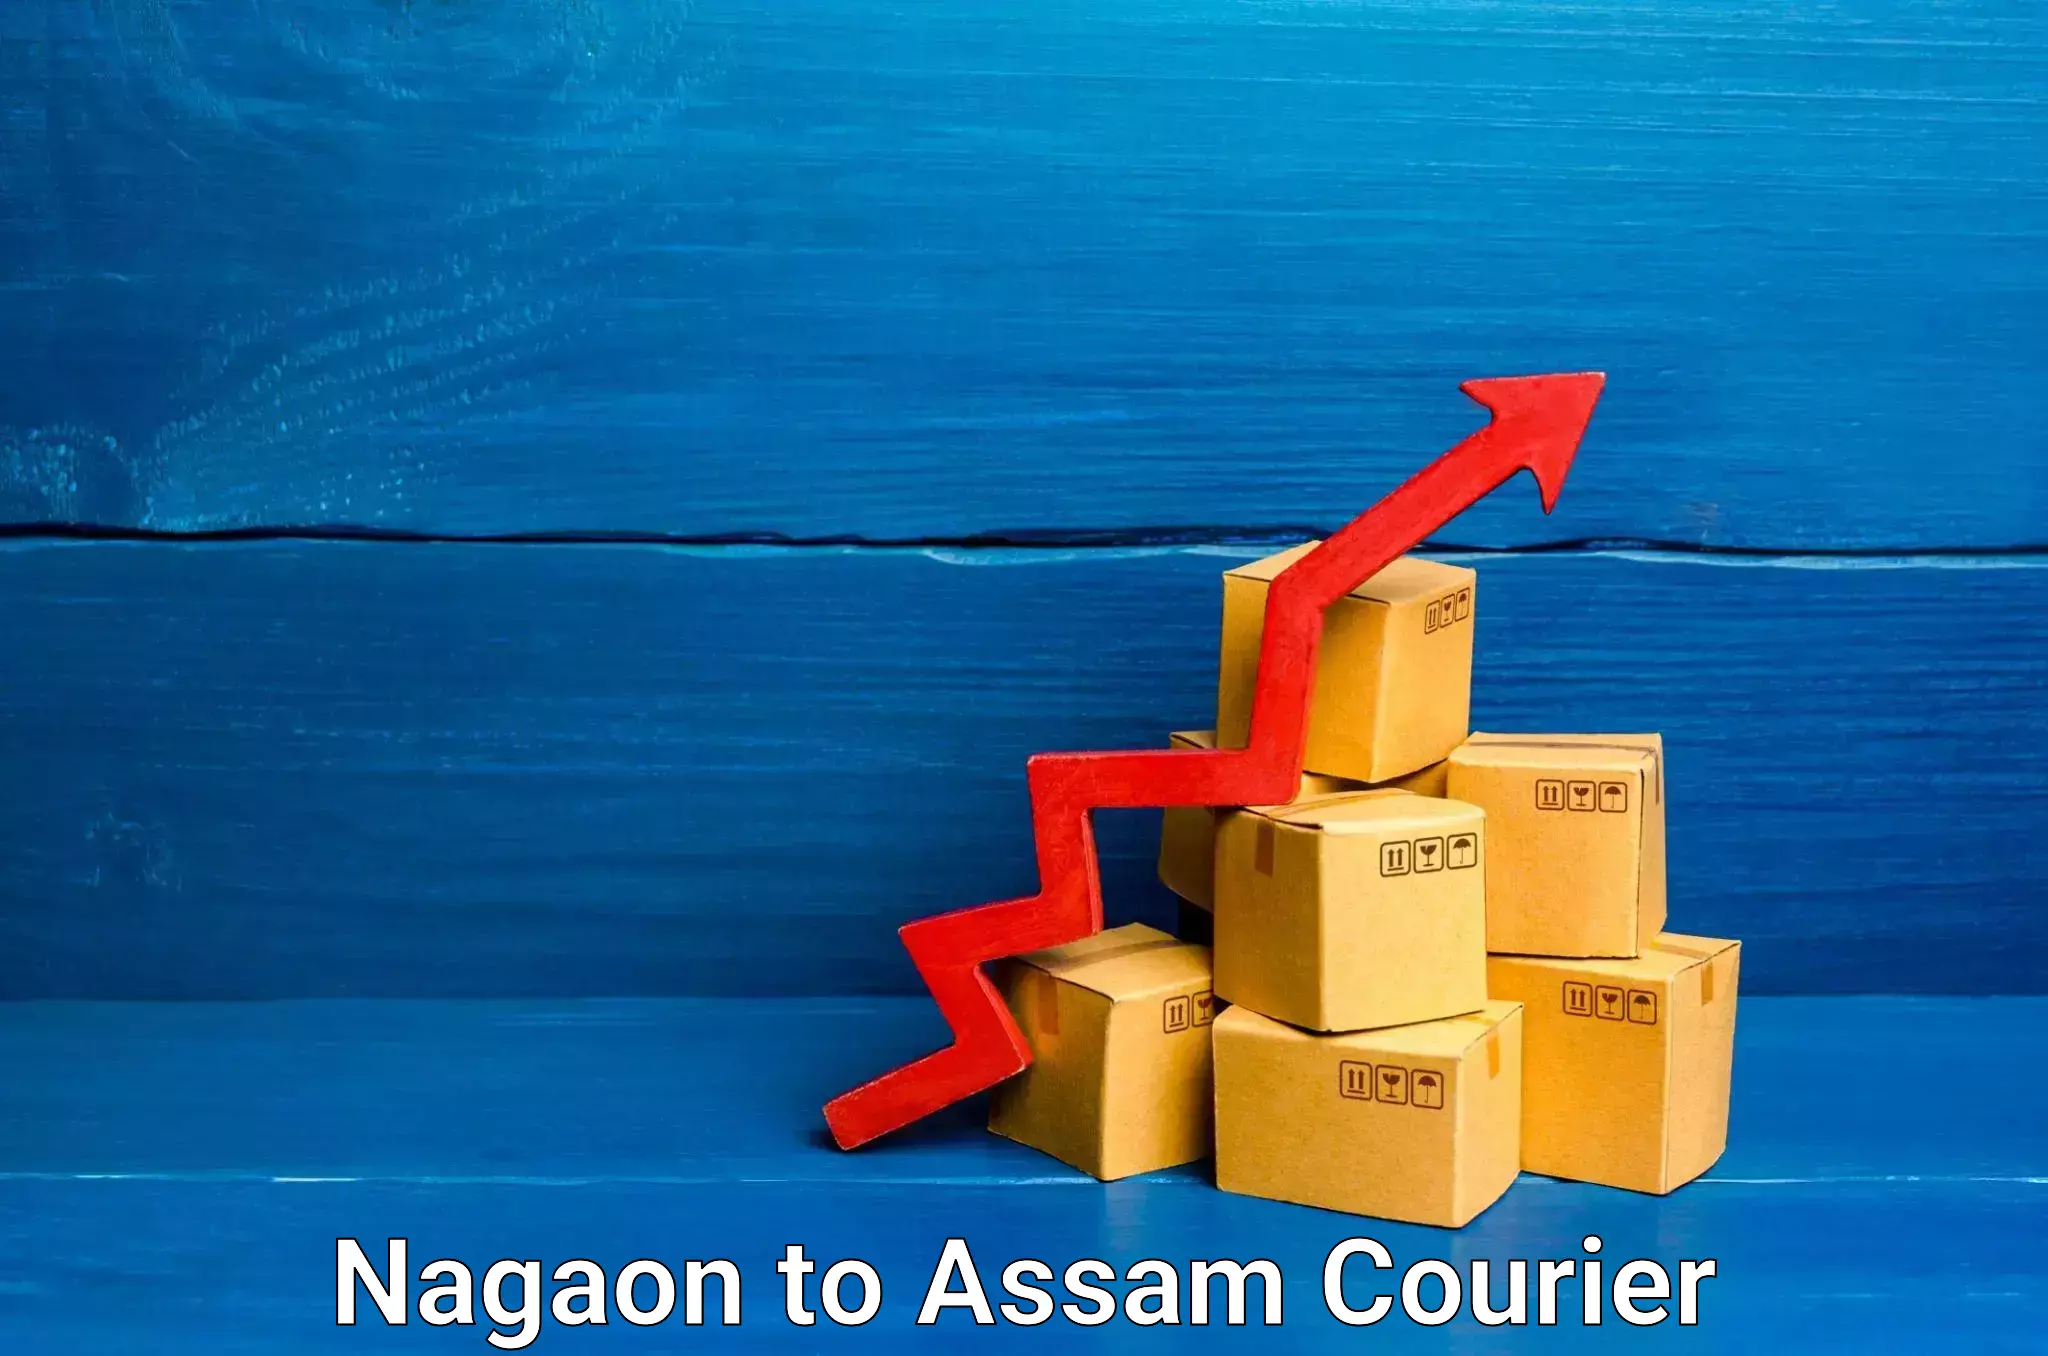 Express delivery capabilities Nagaon to Dehurda